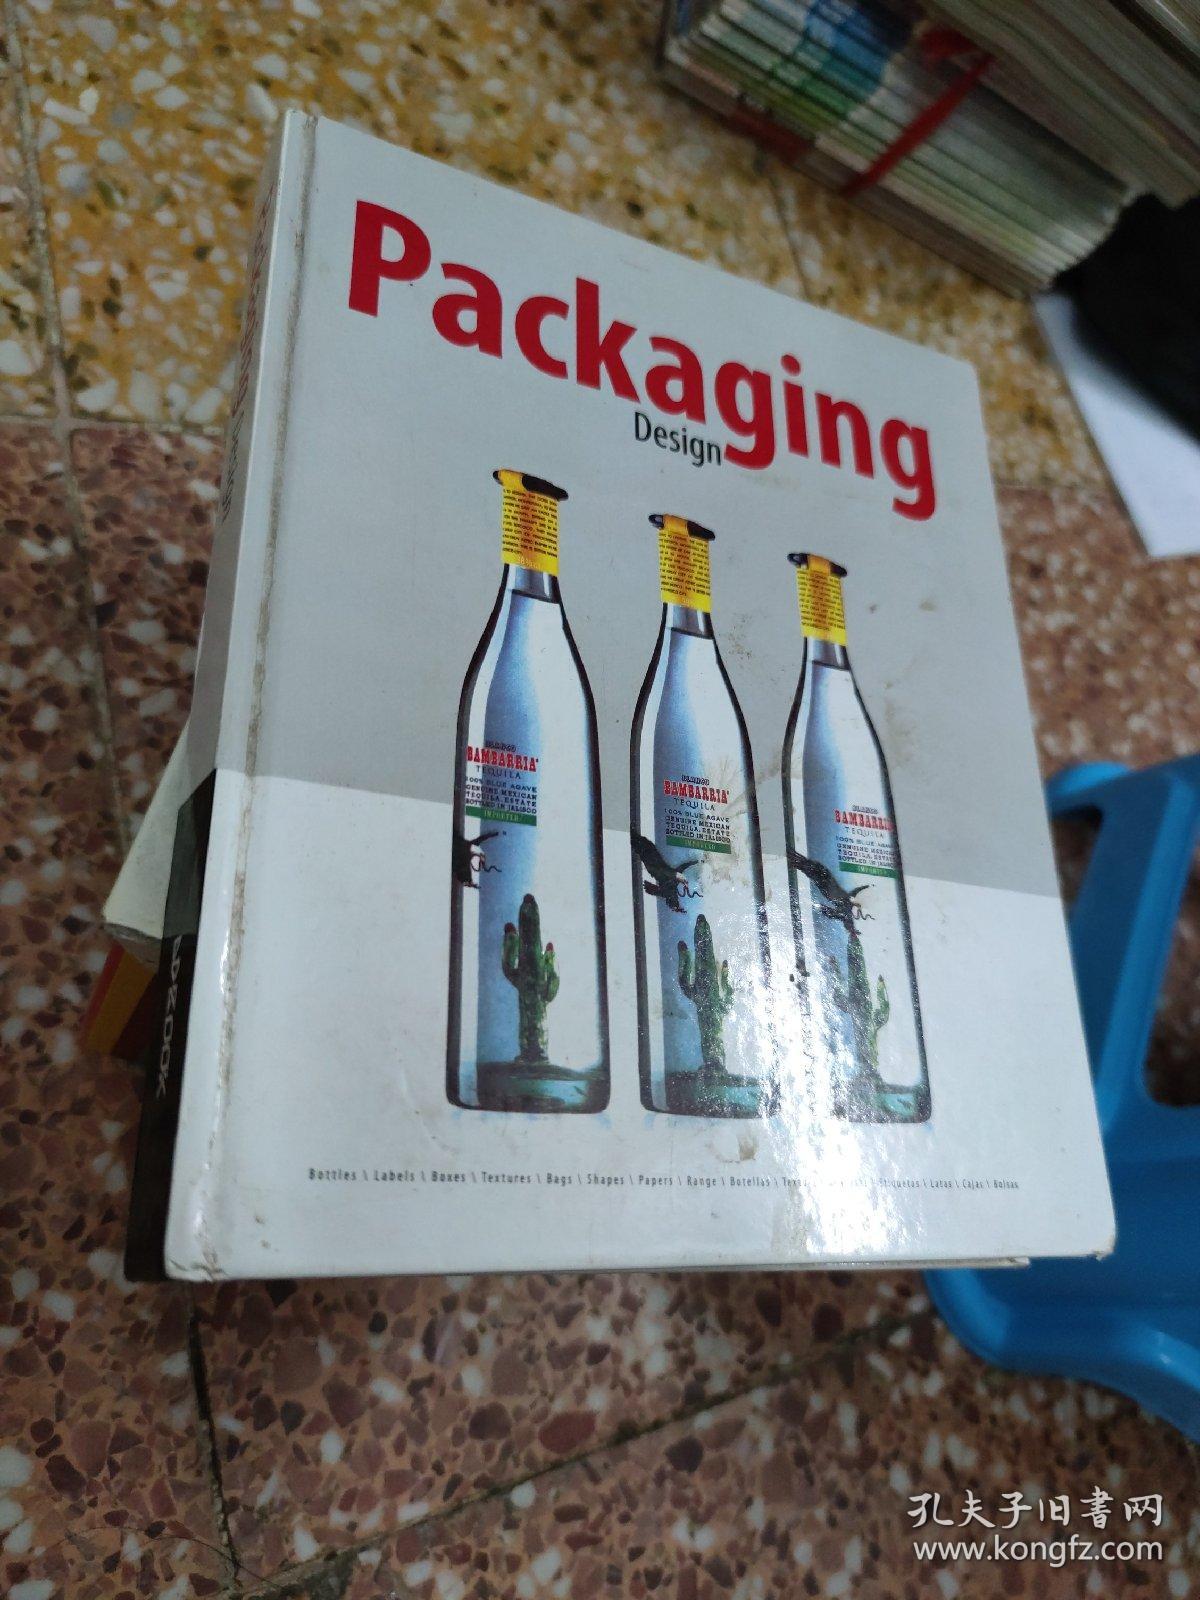 Packaging  design